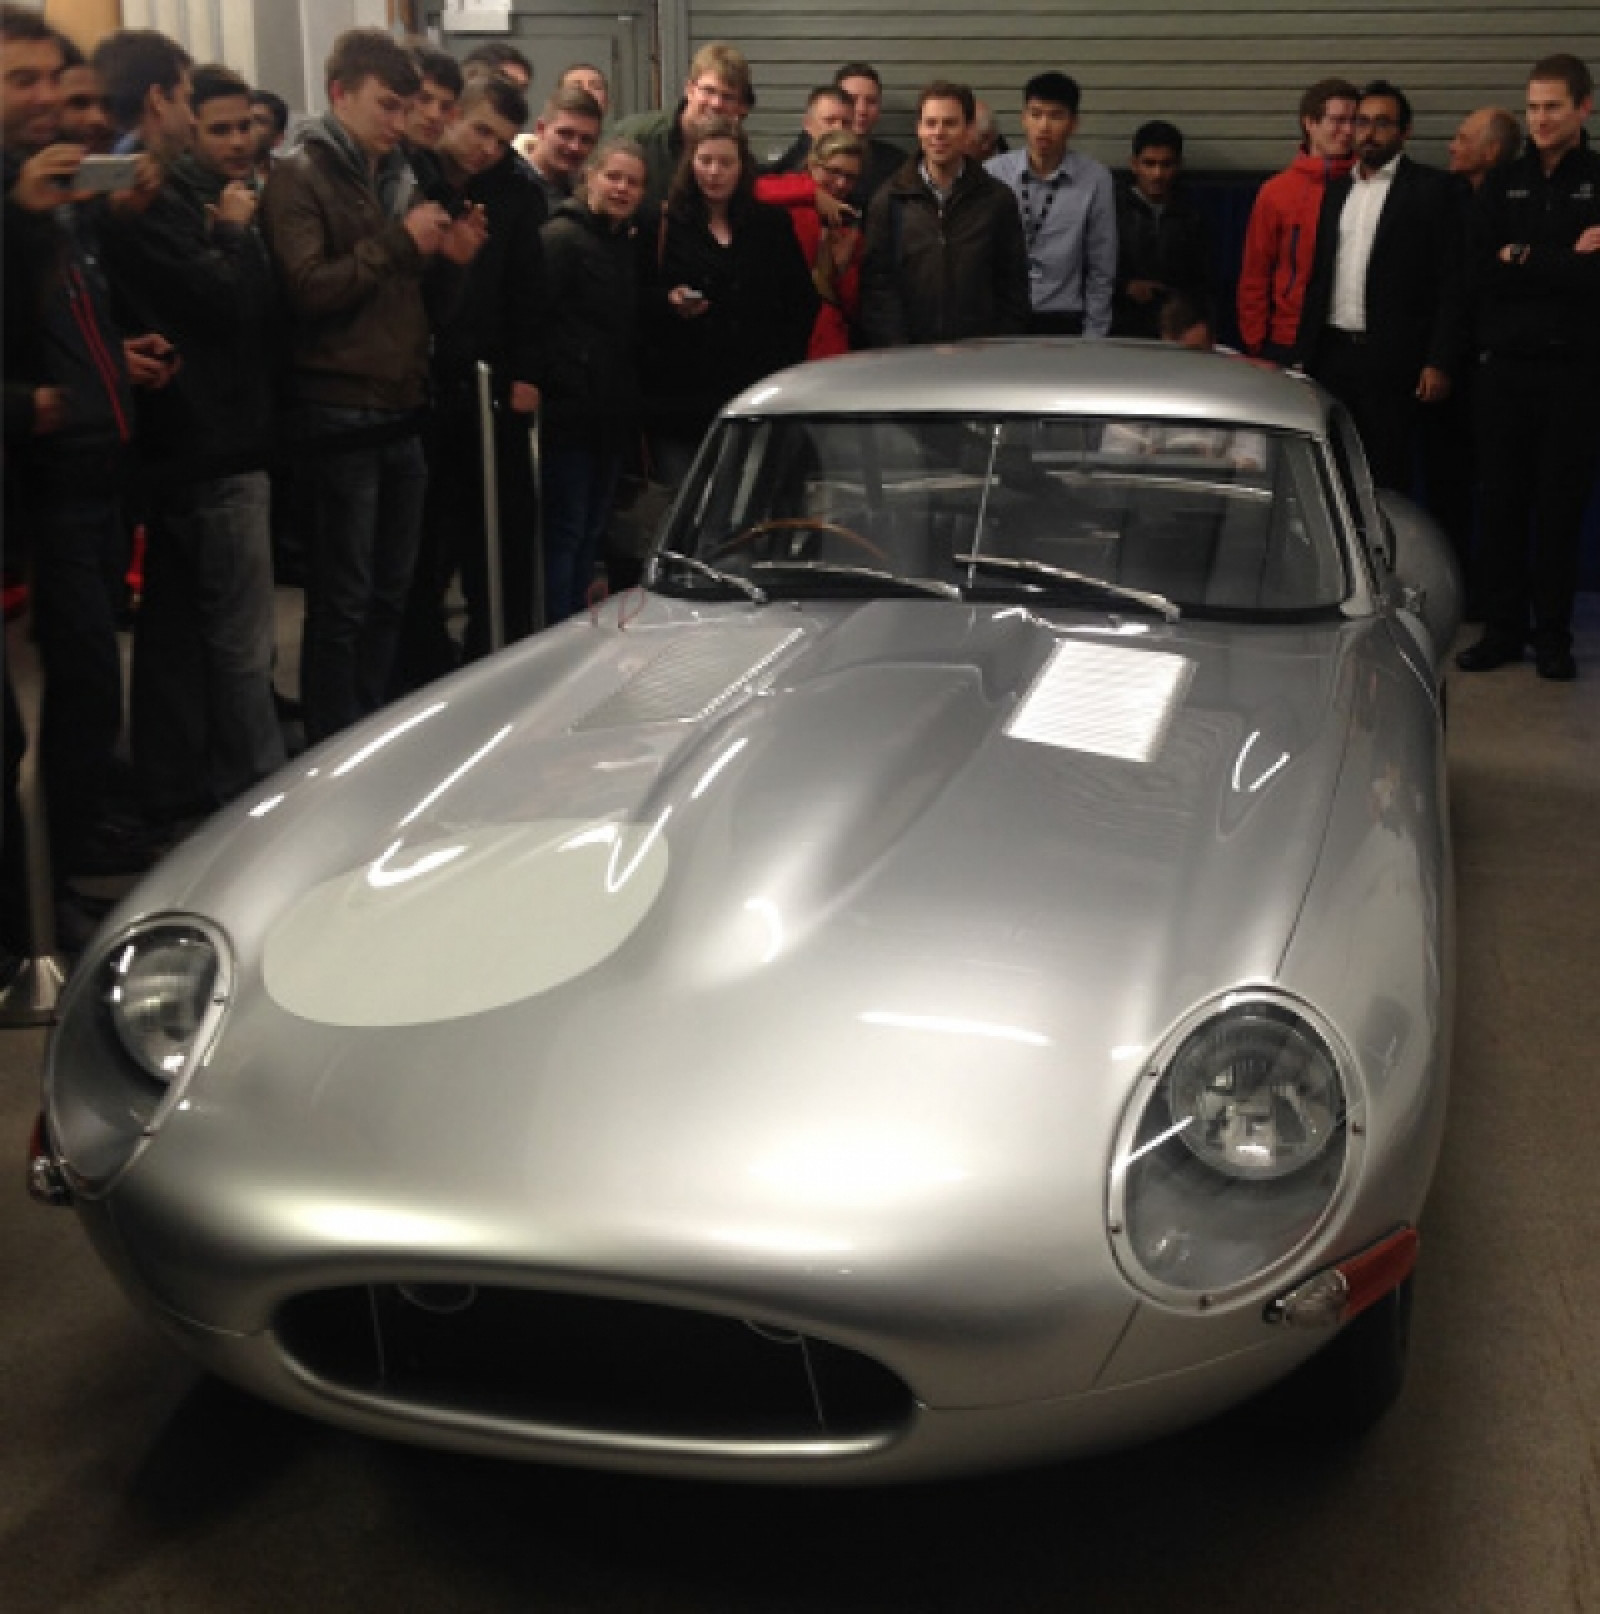 New Jaguar Lightweight E-Type on display at IMechE...